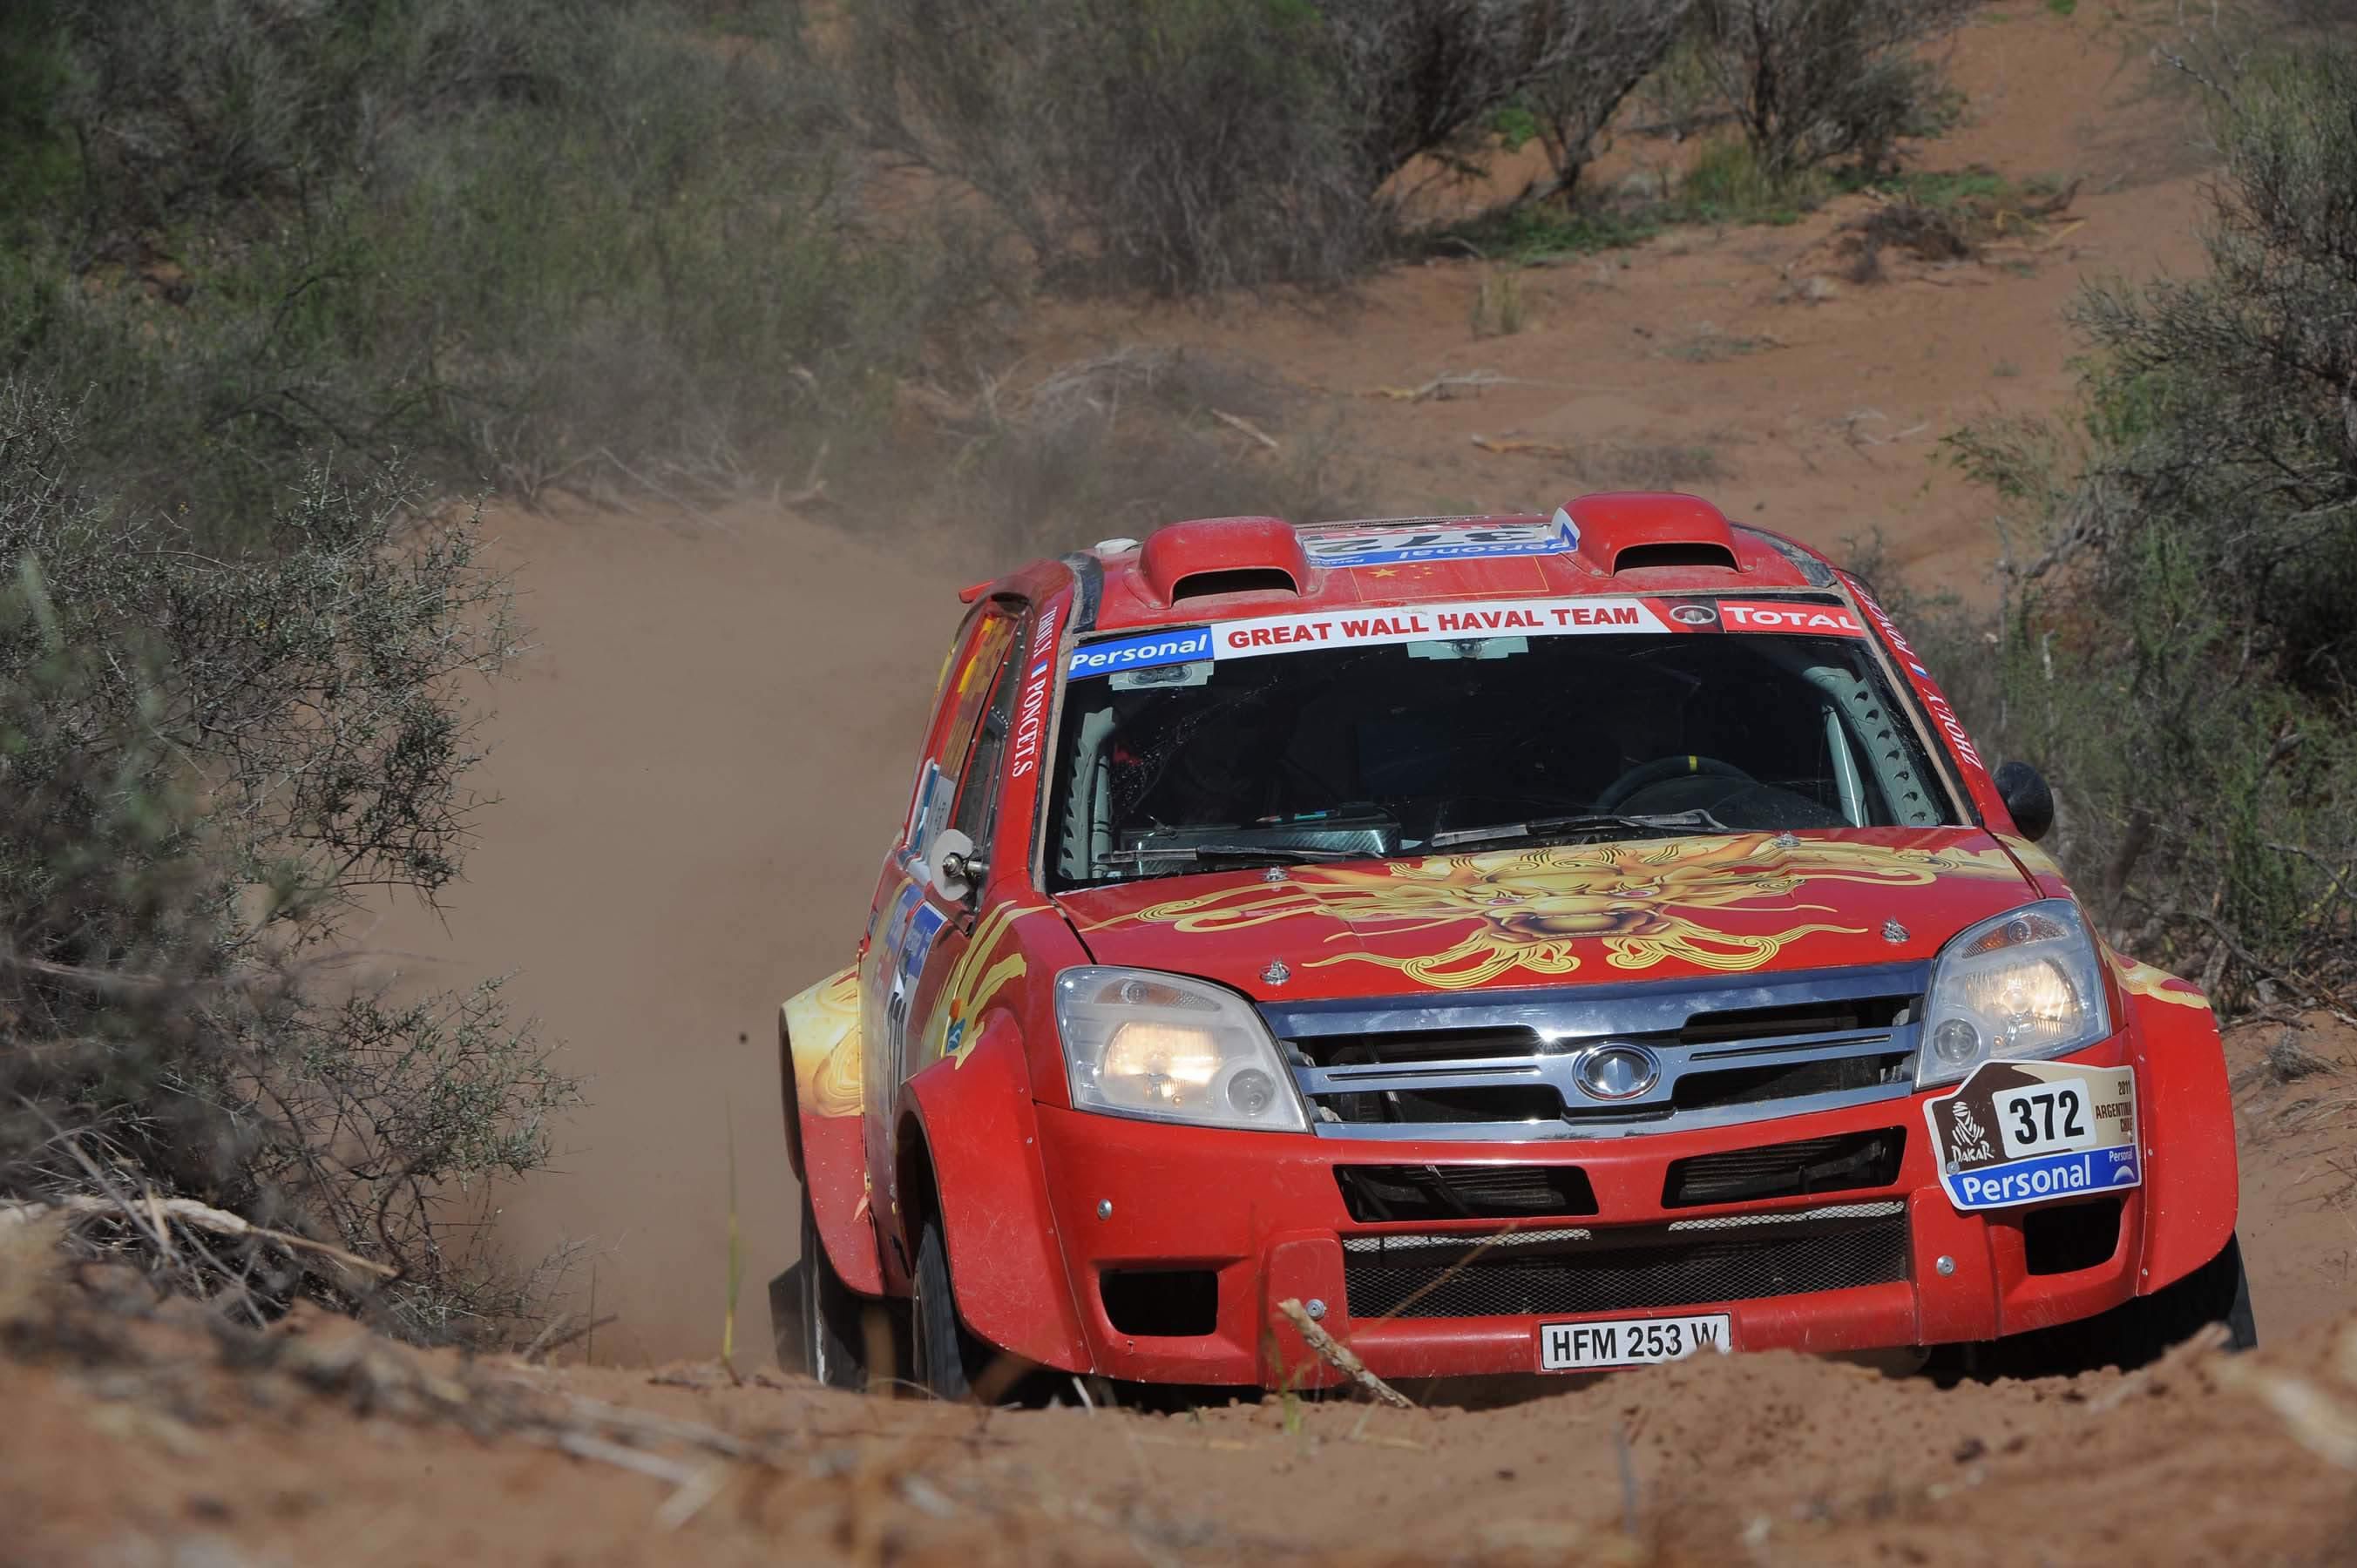 Dakar Rally Wallpapers Hd - Great Wall Haval Suv , HD Wallpaper & Backgrounds